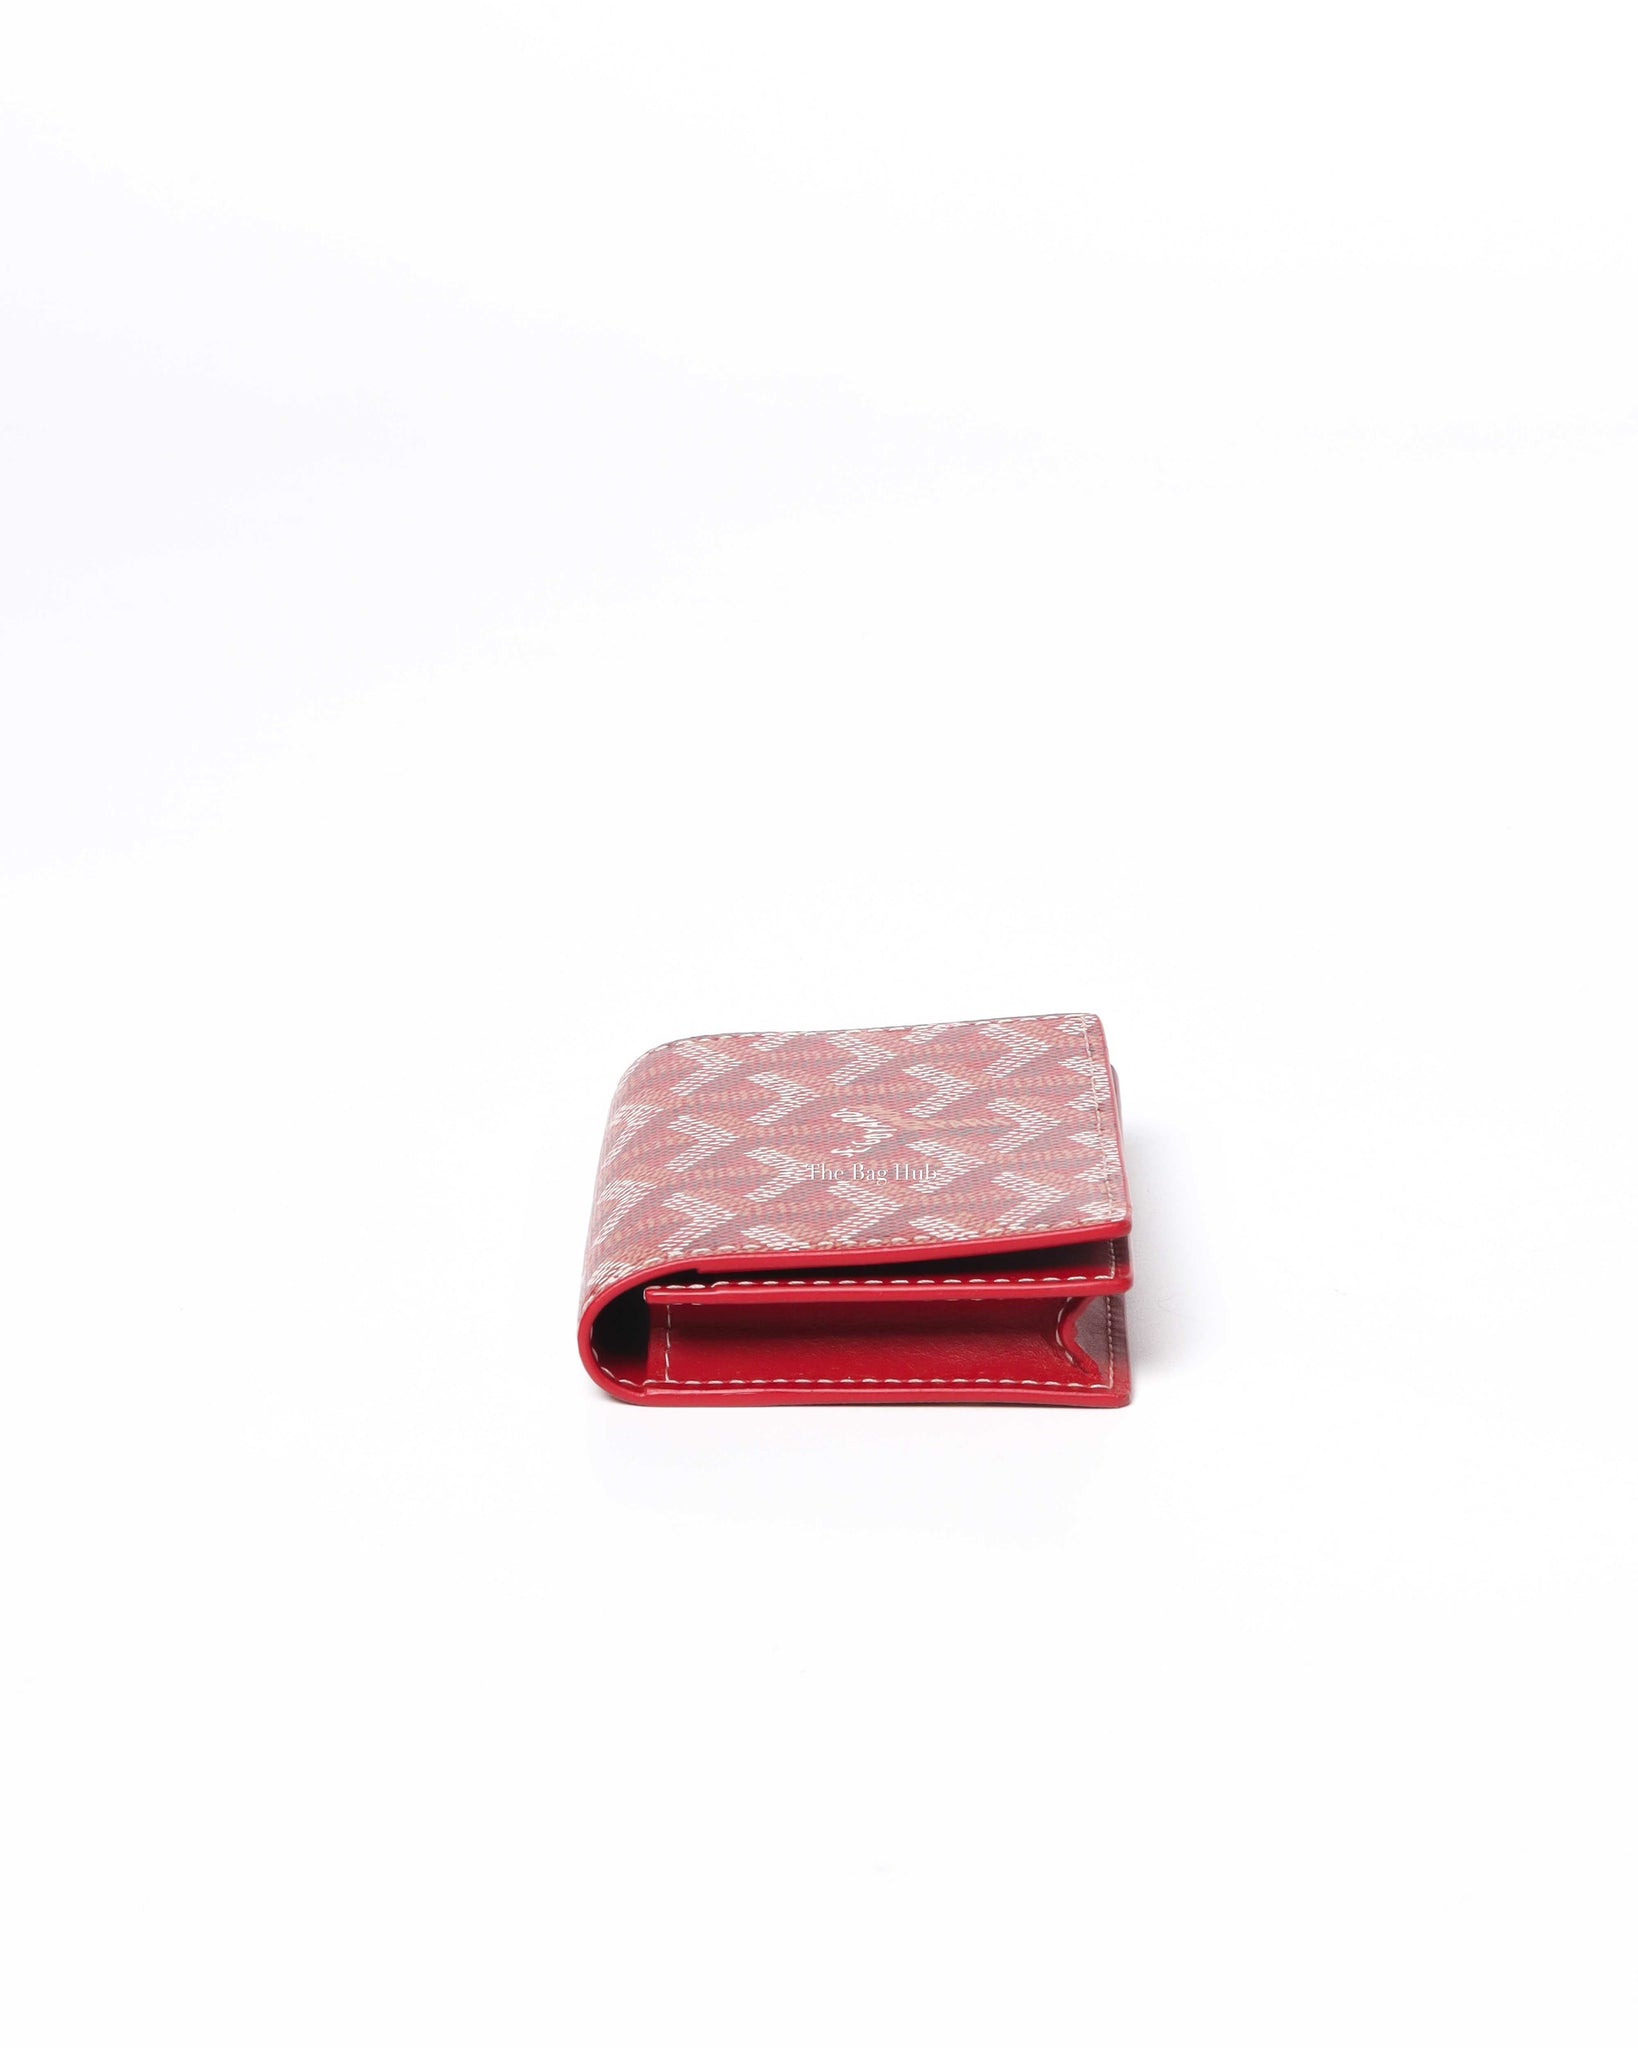 Goyard Red Malesherbes Card Wallet, Designer Brand, Authentic Goyard